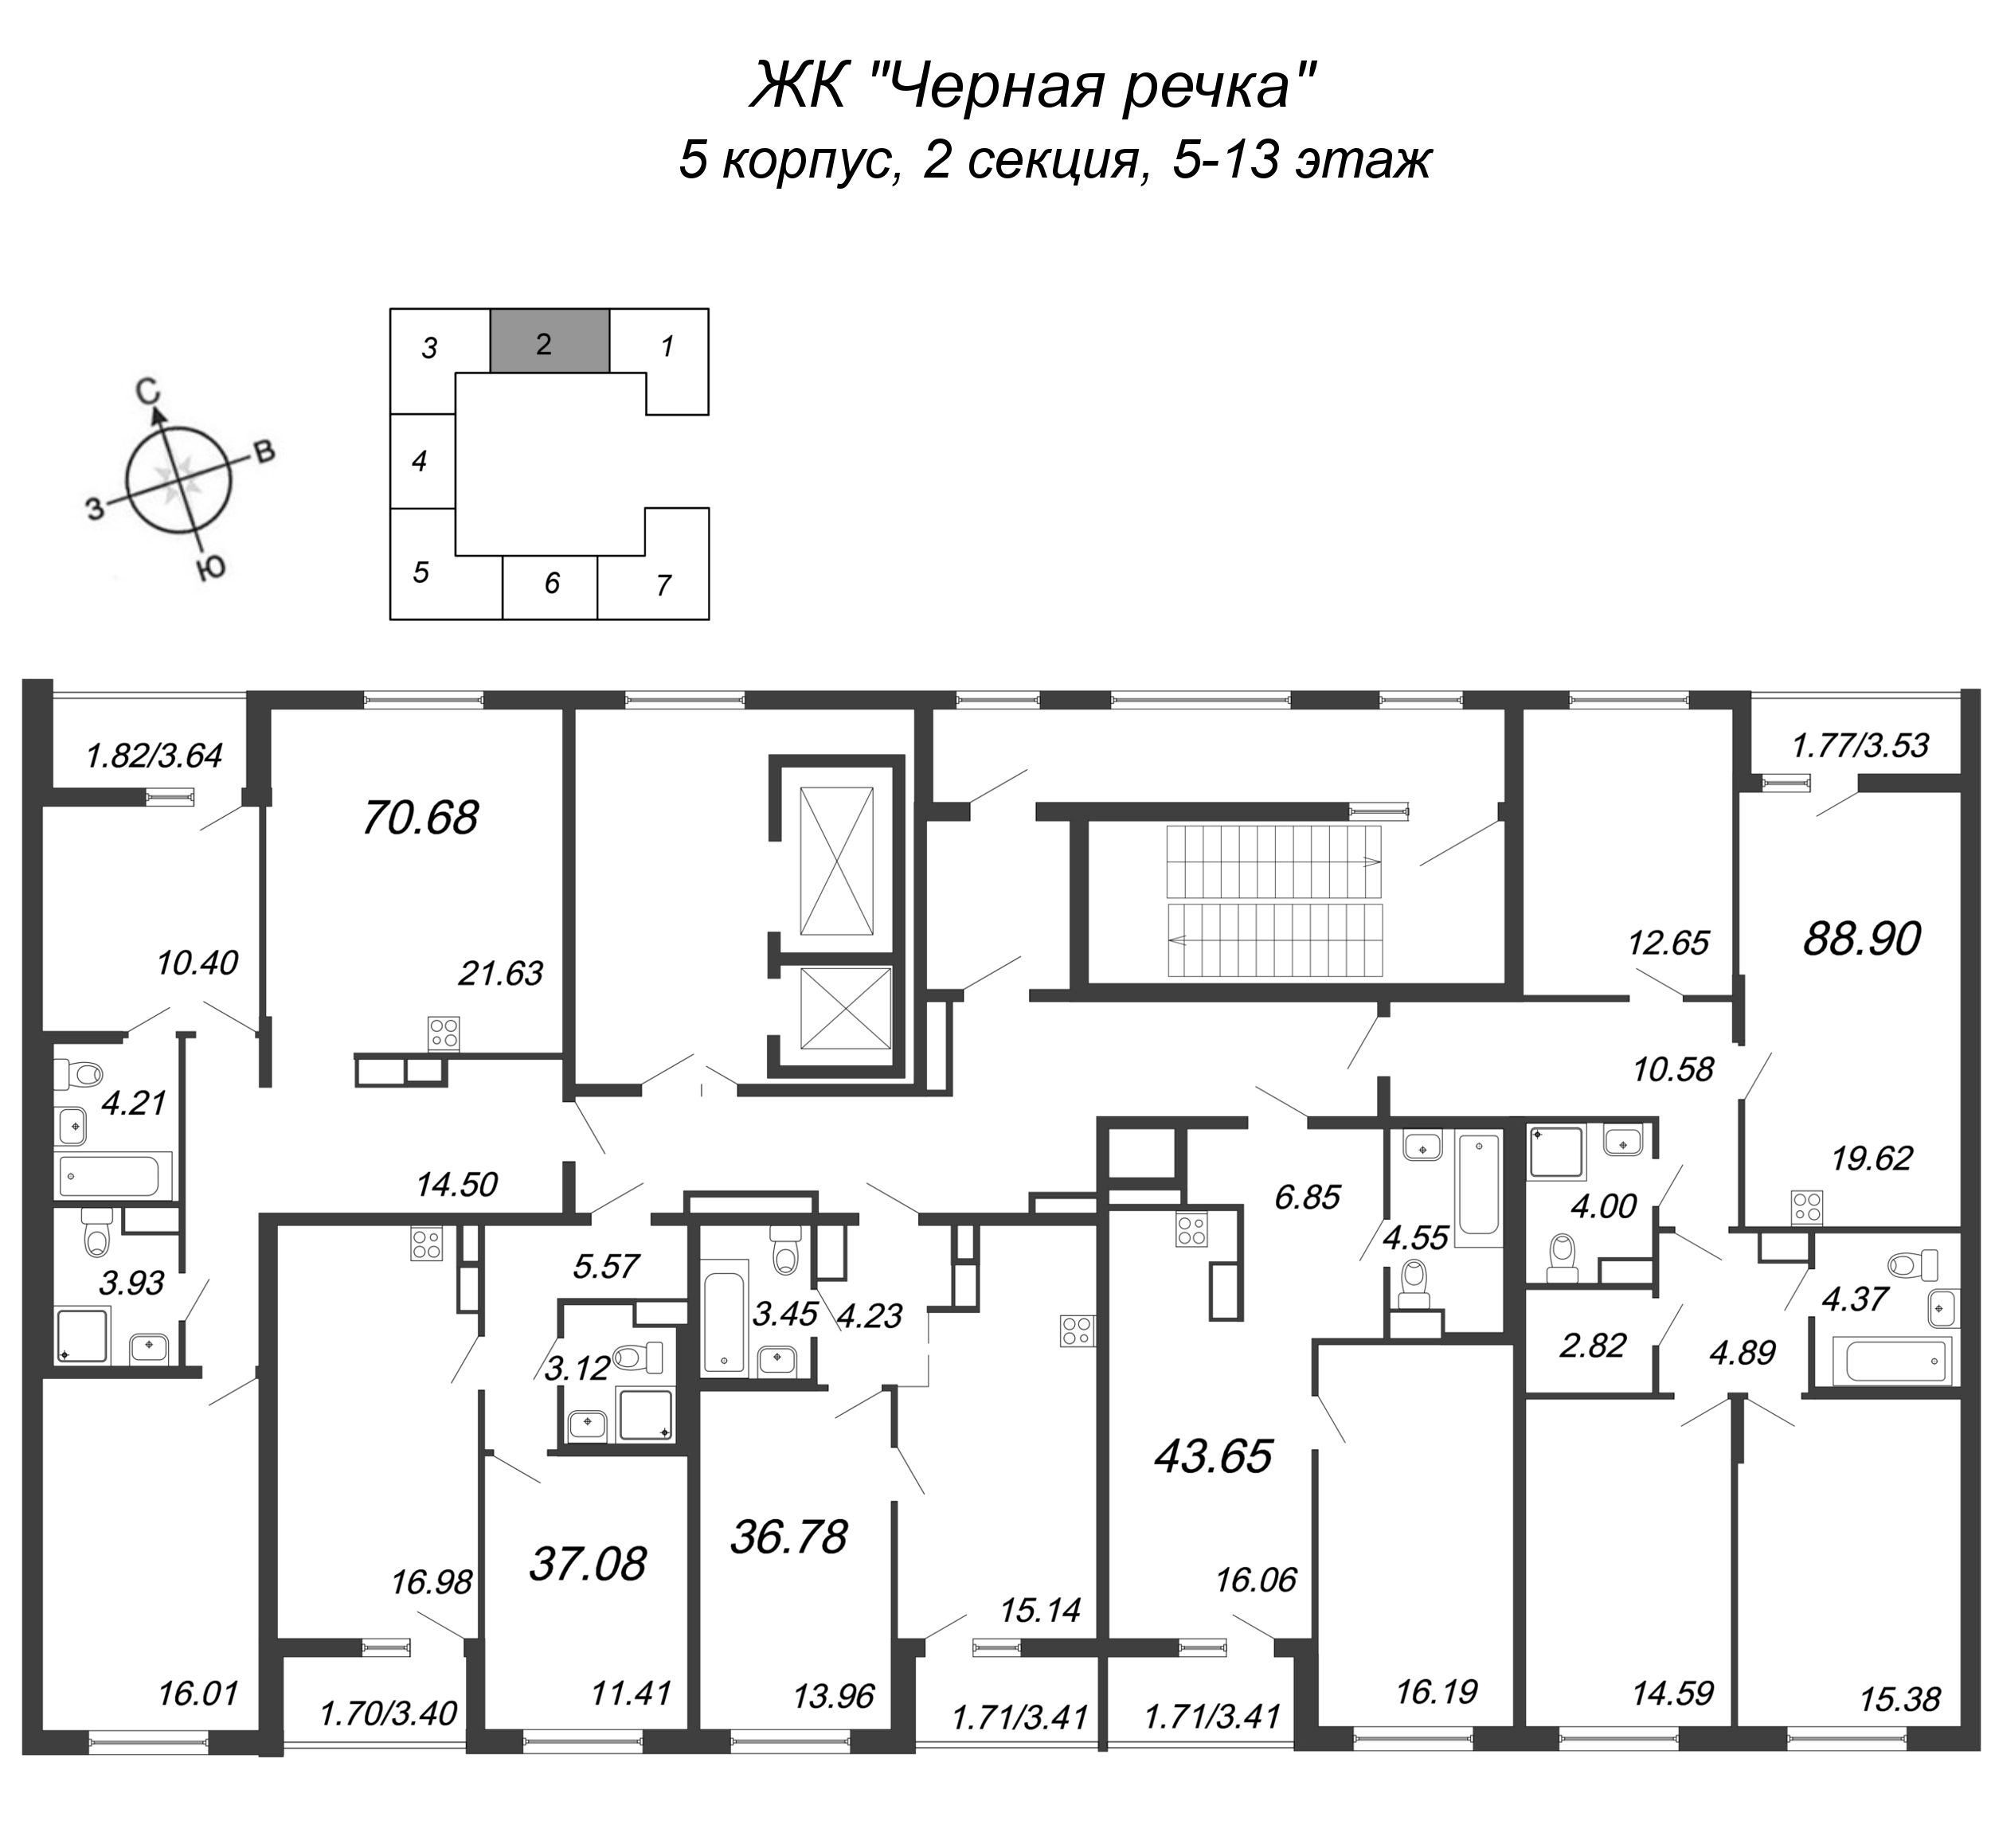 2-комнатная (Евро) квартира, 37.08 м² - планировка этажа